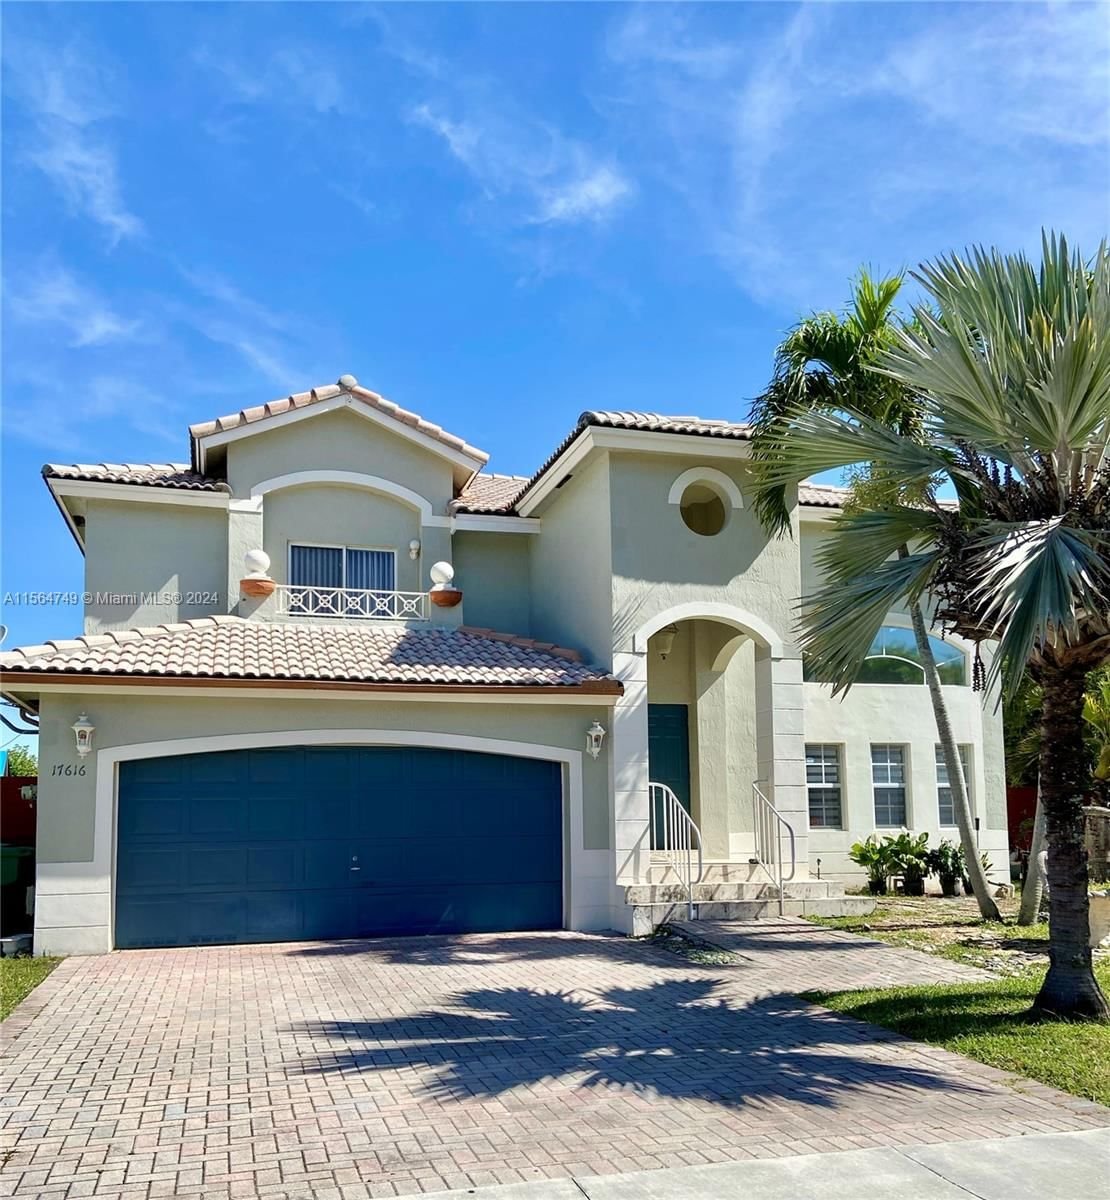 Real estate property located at 17616 145th Ct, Miami-Dade County, SUMMERWIND SUB, Miami, FL